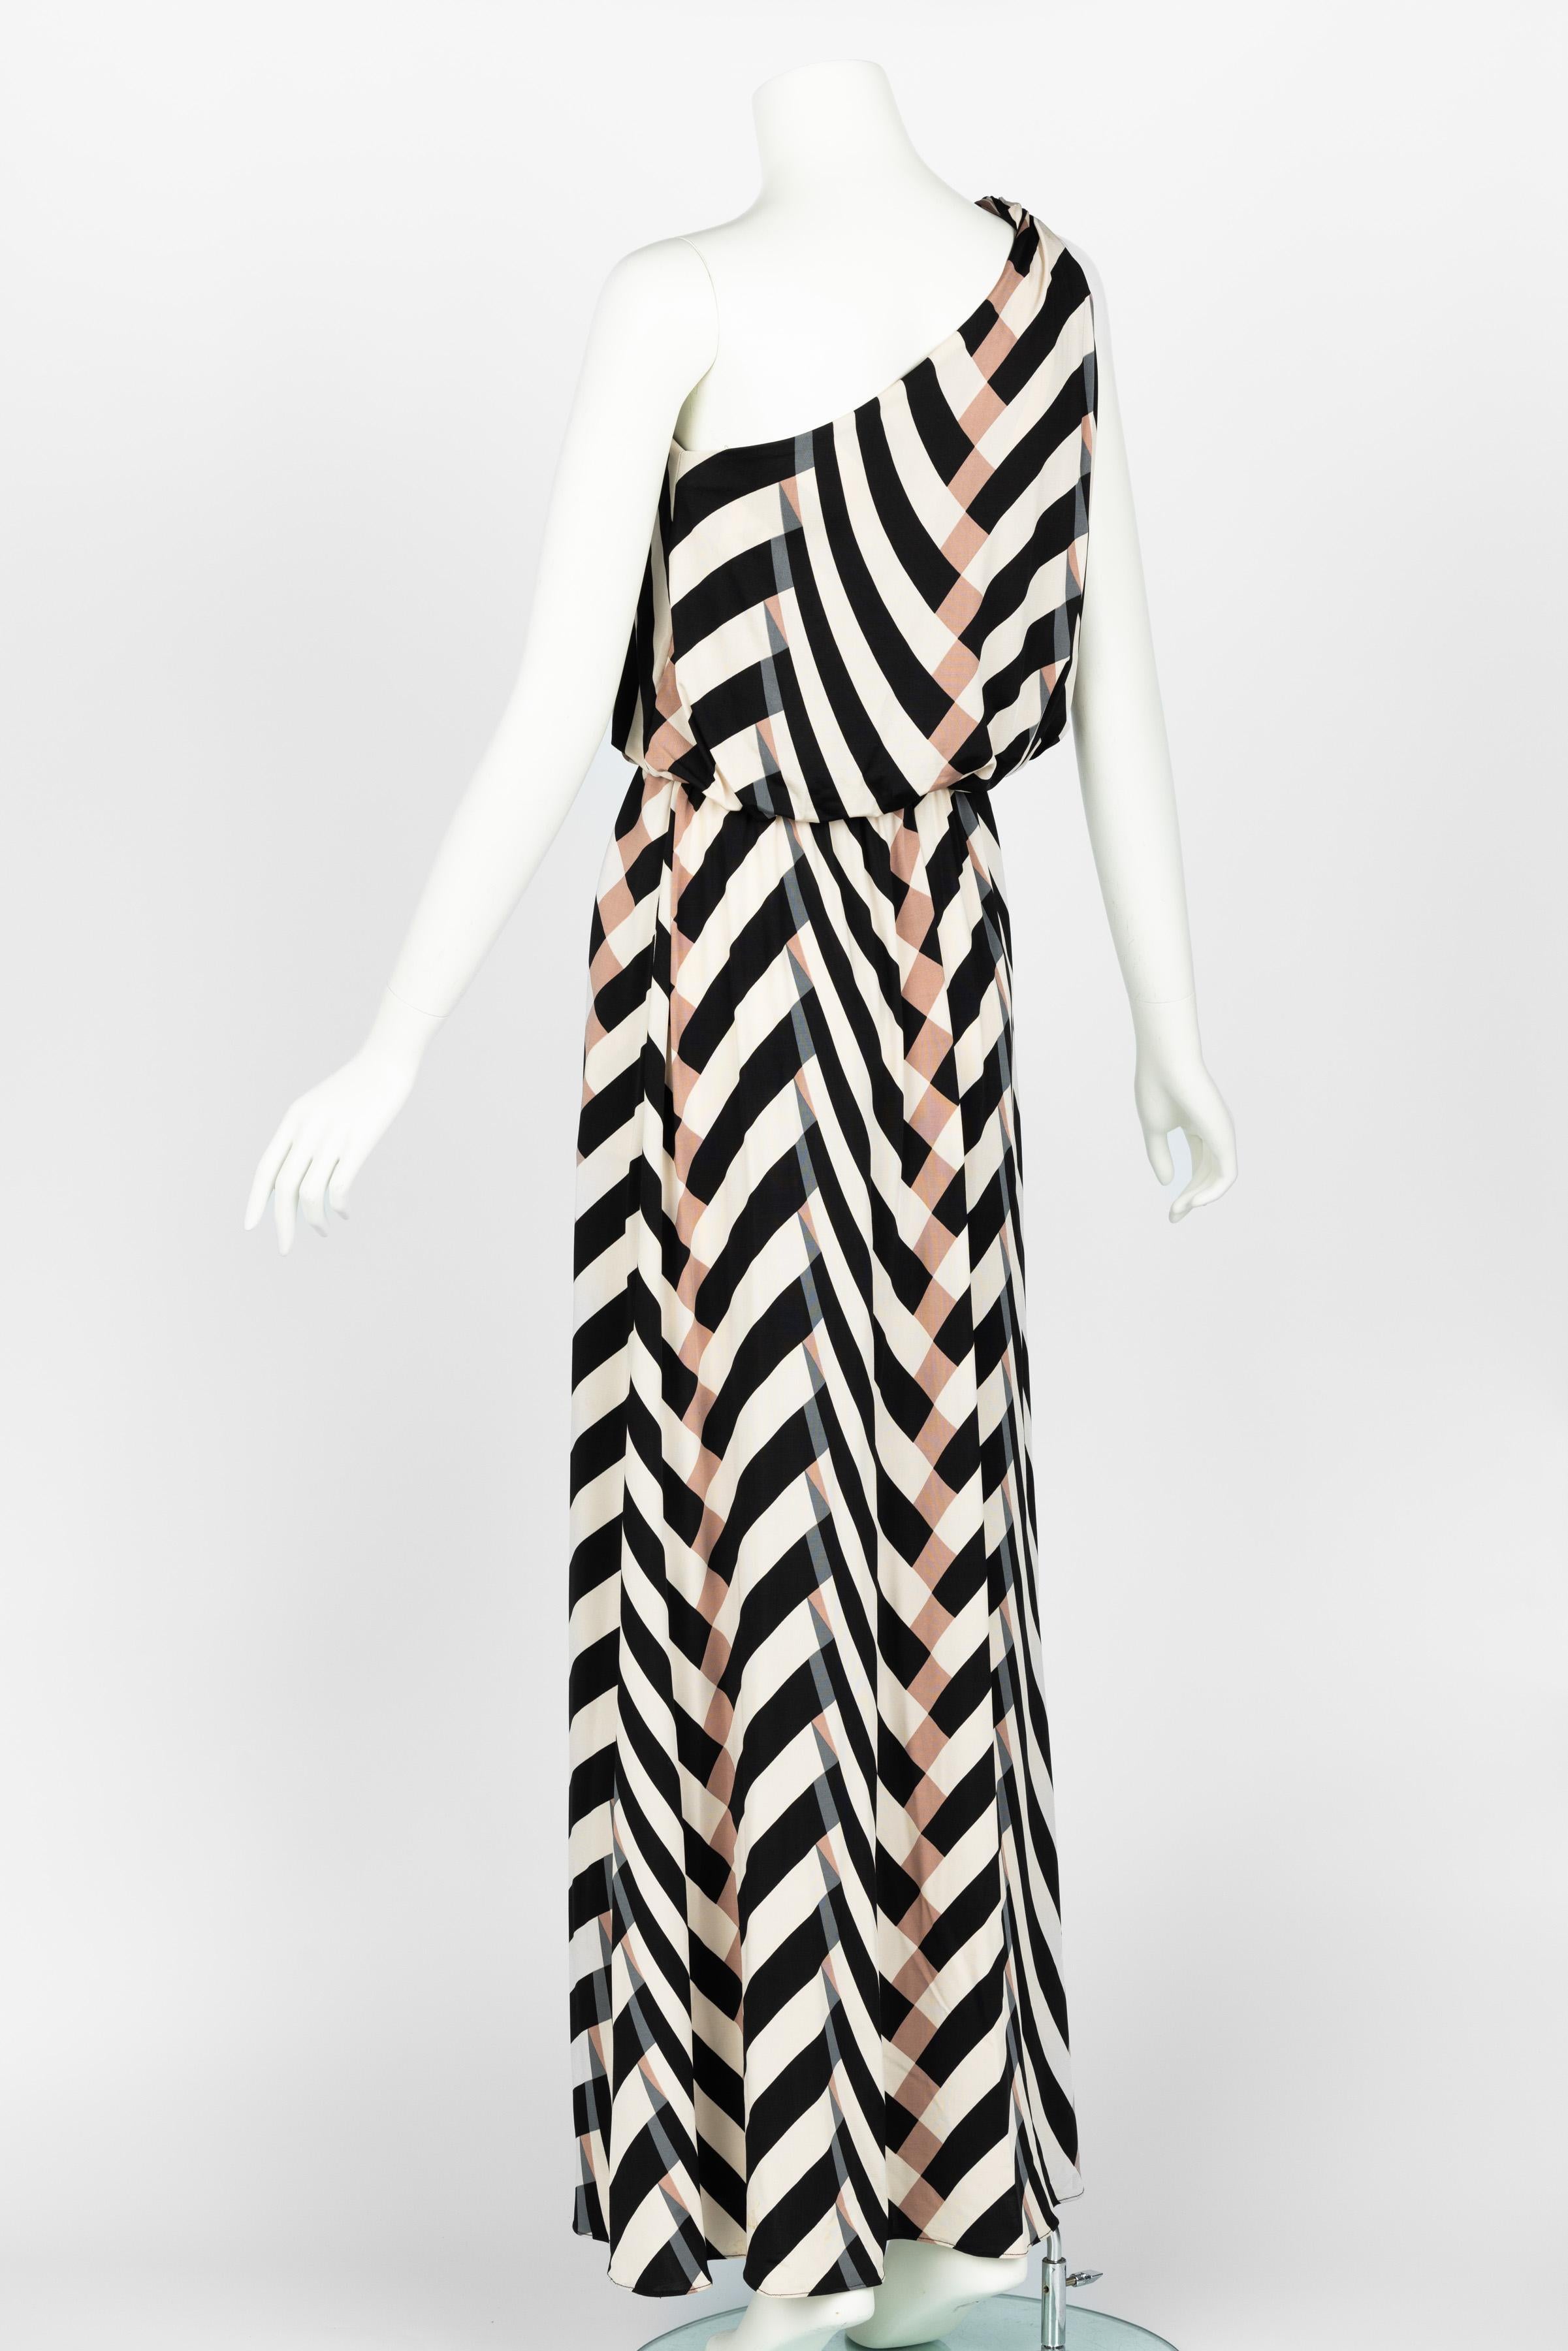 Lanvin  Alber Elbaz Spring 2015 One Shoulder Chevron Striped Jersey Dress For Sale 2